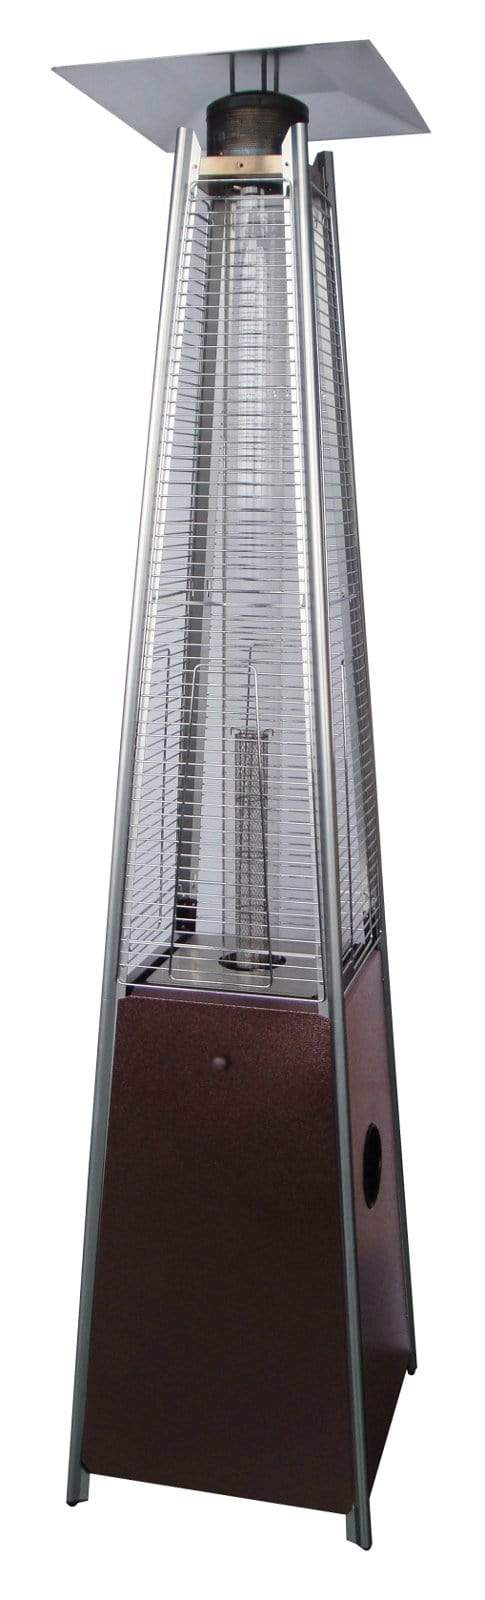 Hiland Tower Patio Heater Patio Heater Hiland Patio Heaters Glass Tube Patio Heater in Hammered Bronze